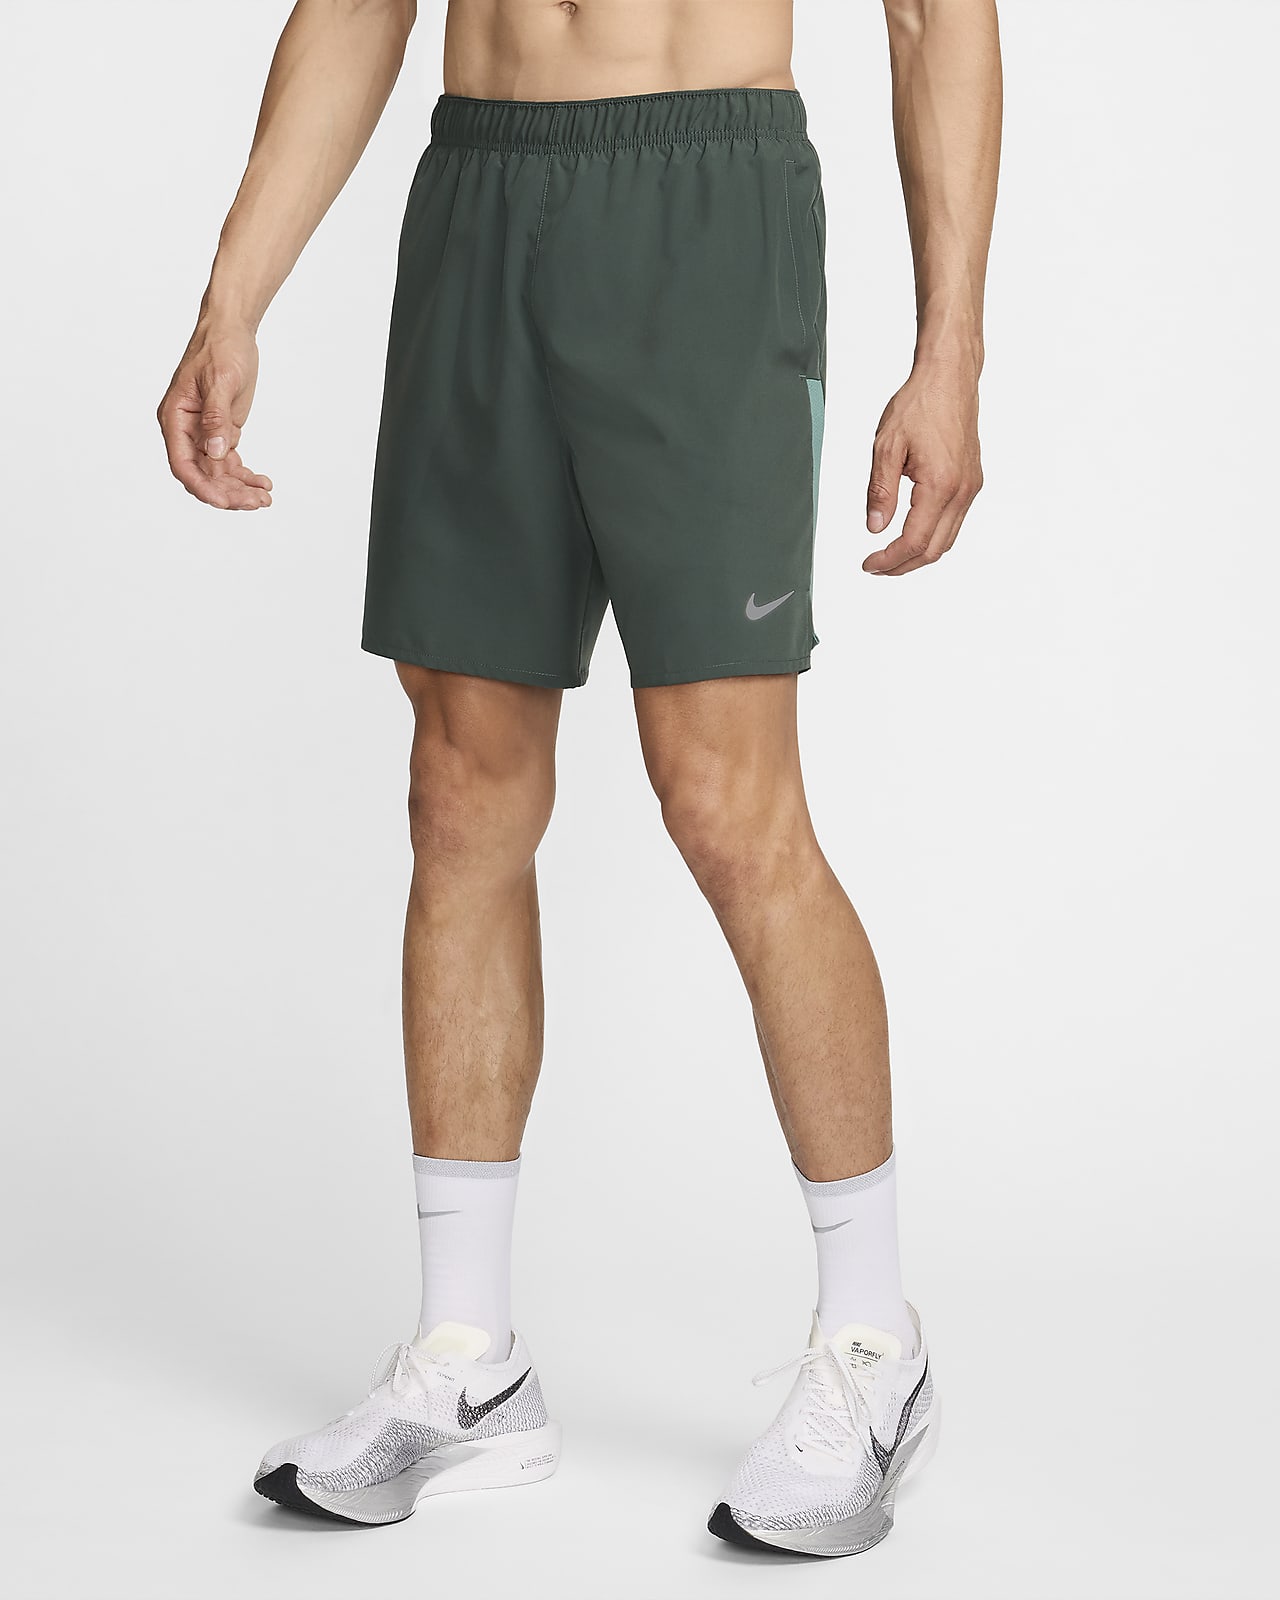 Nike Challenger Pantalons curts Dri-FIT amb eslip incorporat de 18 cm de running - Home